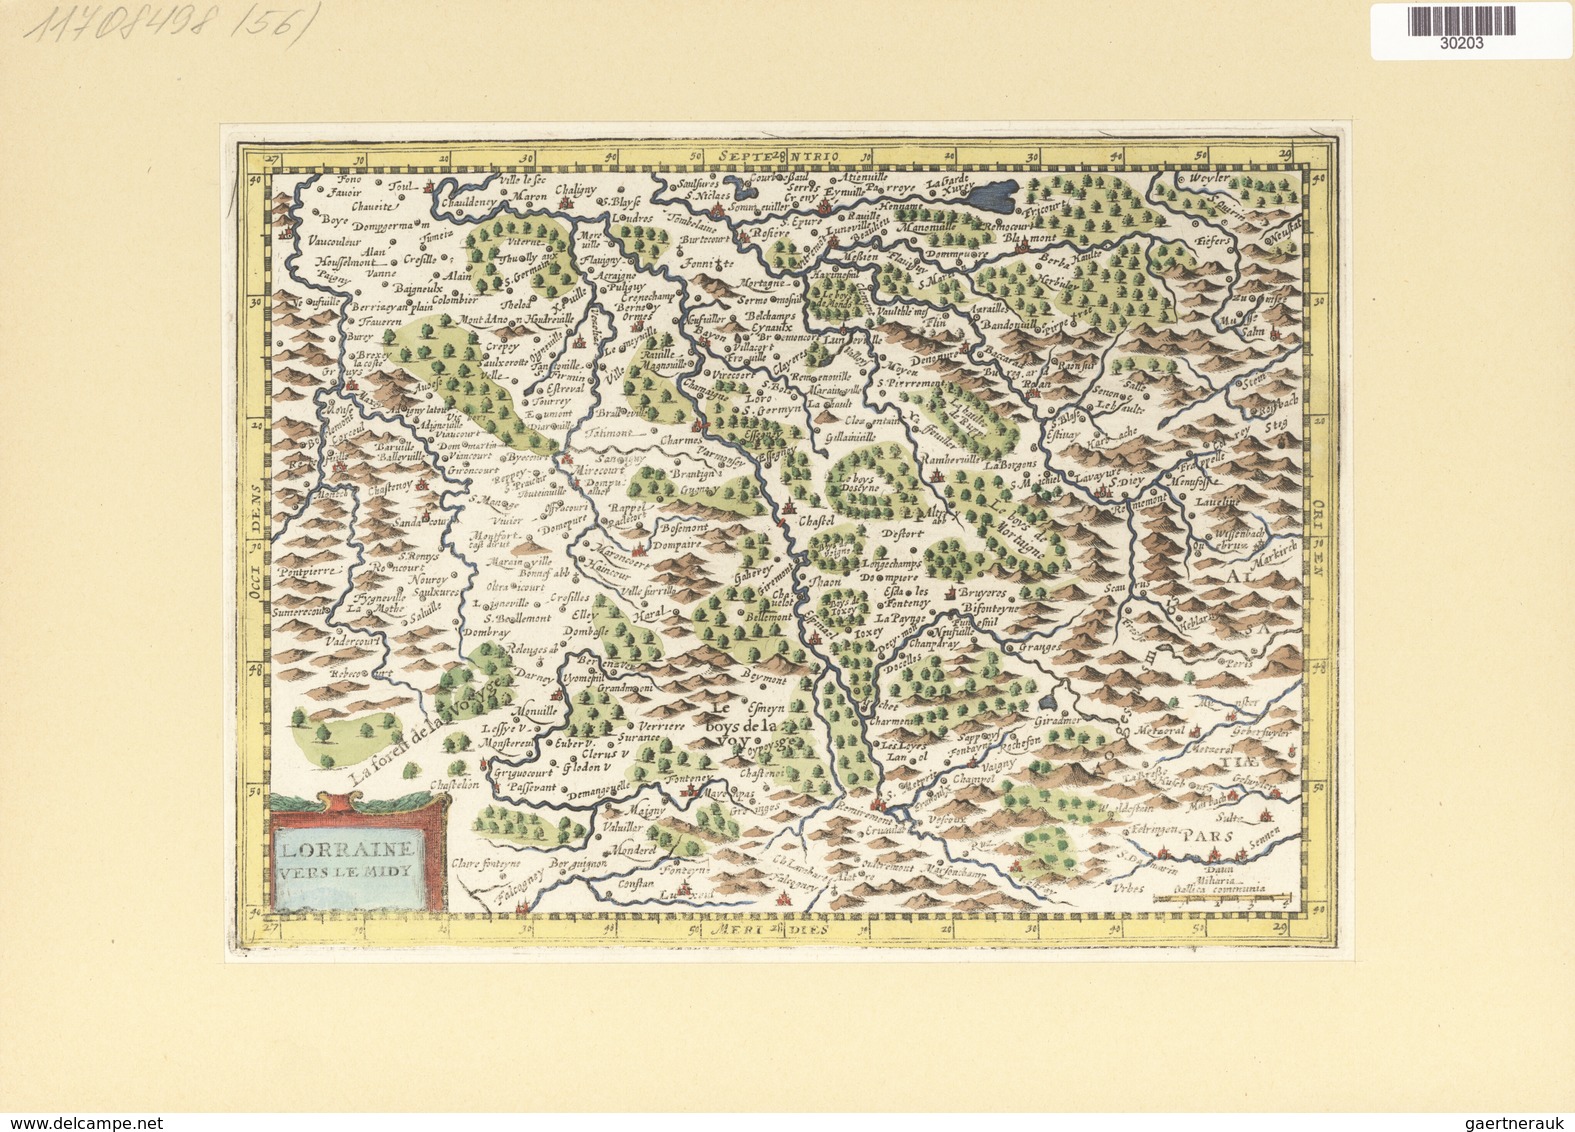 Landkarten Und Stiche: 1734. Lorraine Vers Le Midy, Published In The Mercator Atlas Minor 1734 Editi - Geographie